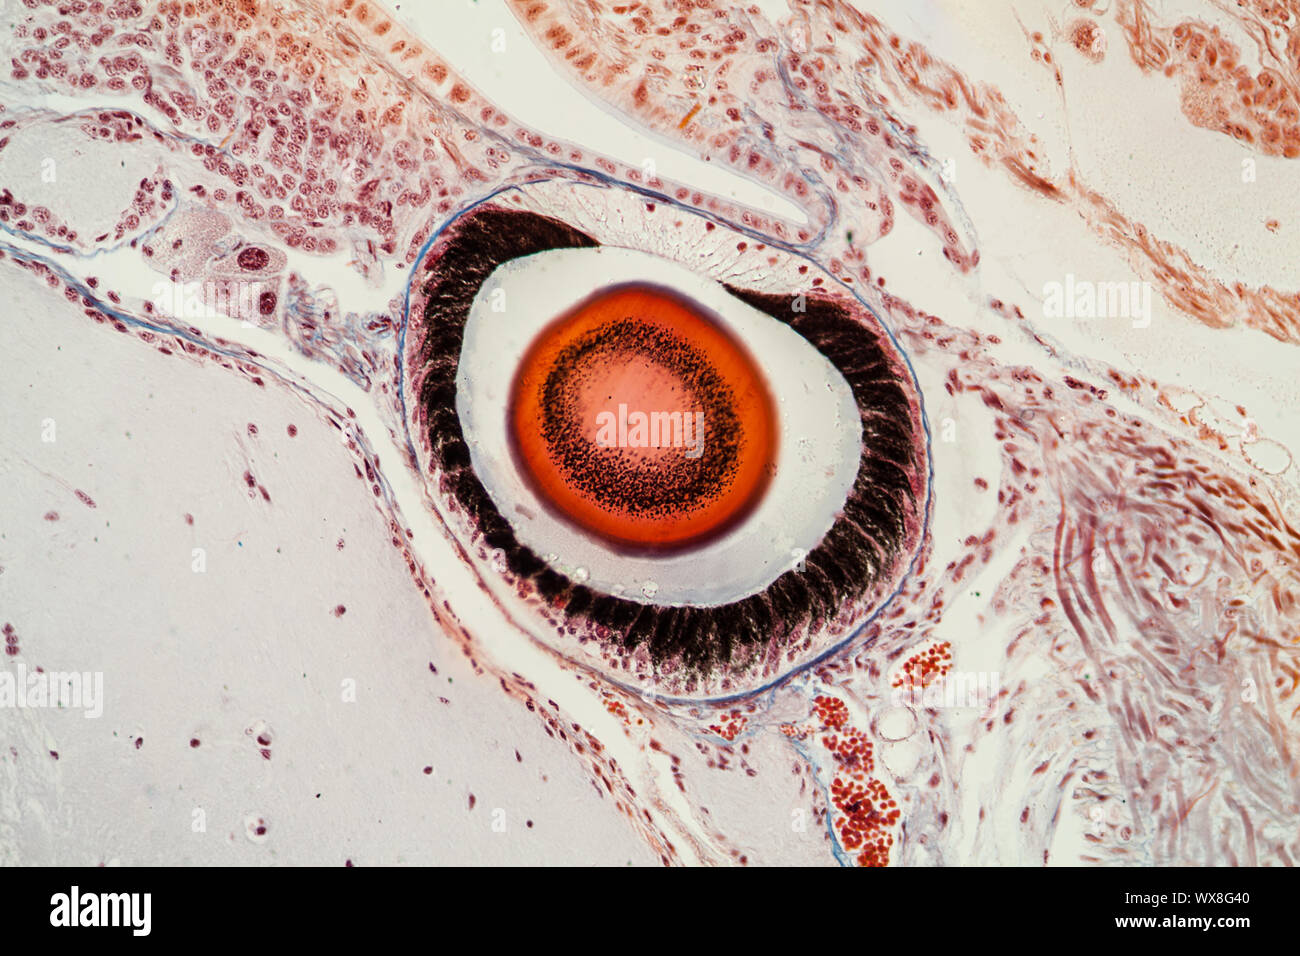 Probe eye of the snail tissue under the microscope 200x Stock Photo - Alamy